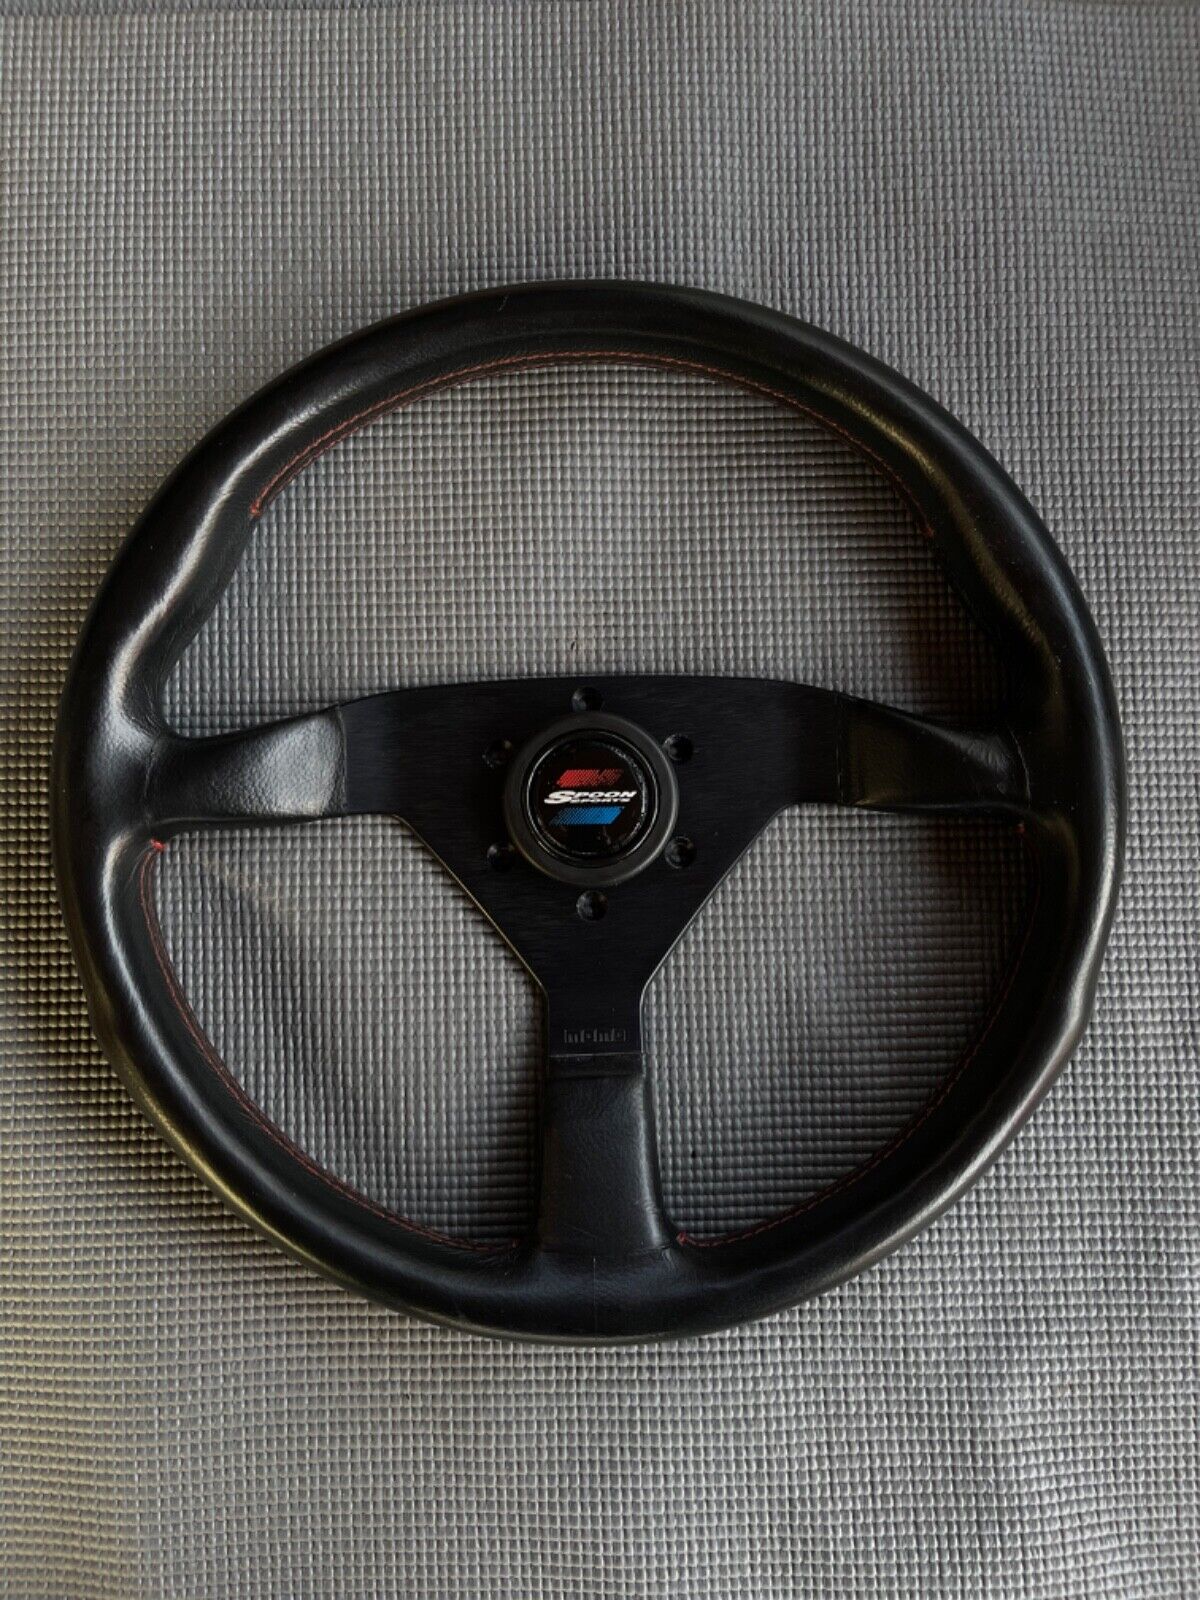 *Rare* Authentic Spoon Sports Gen 2 Steering Wheel